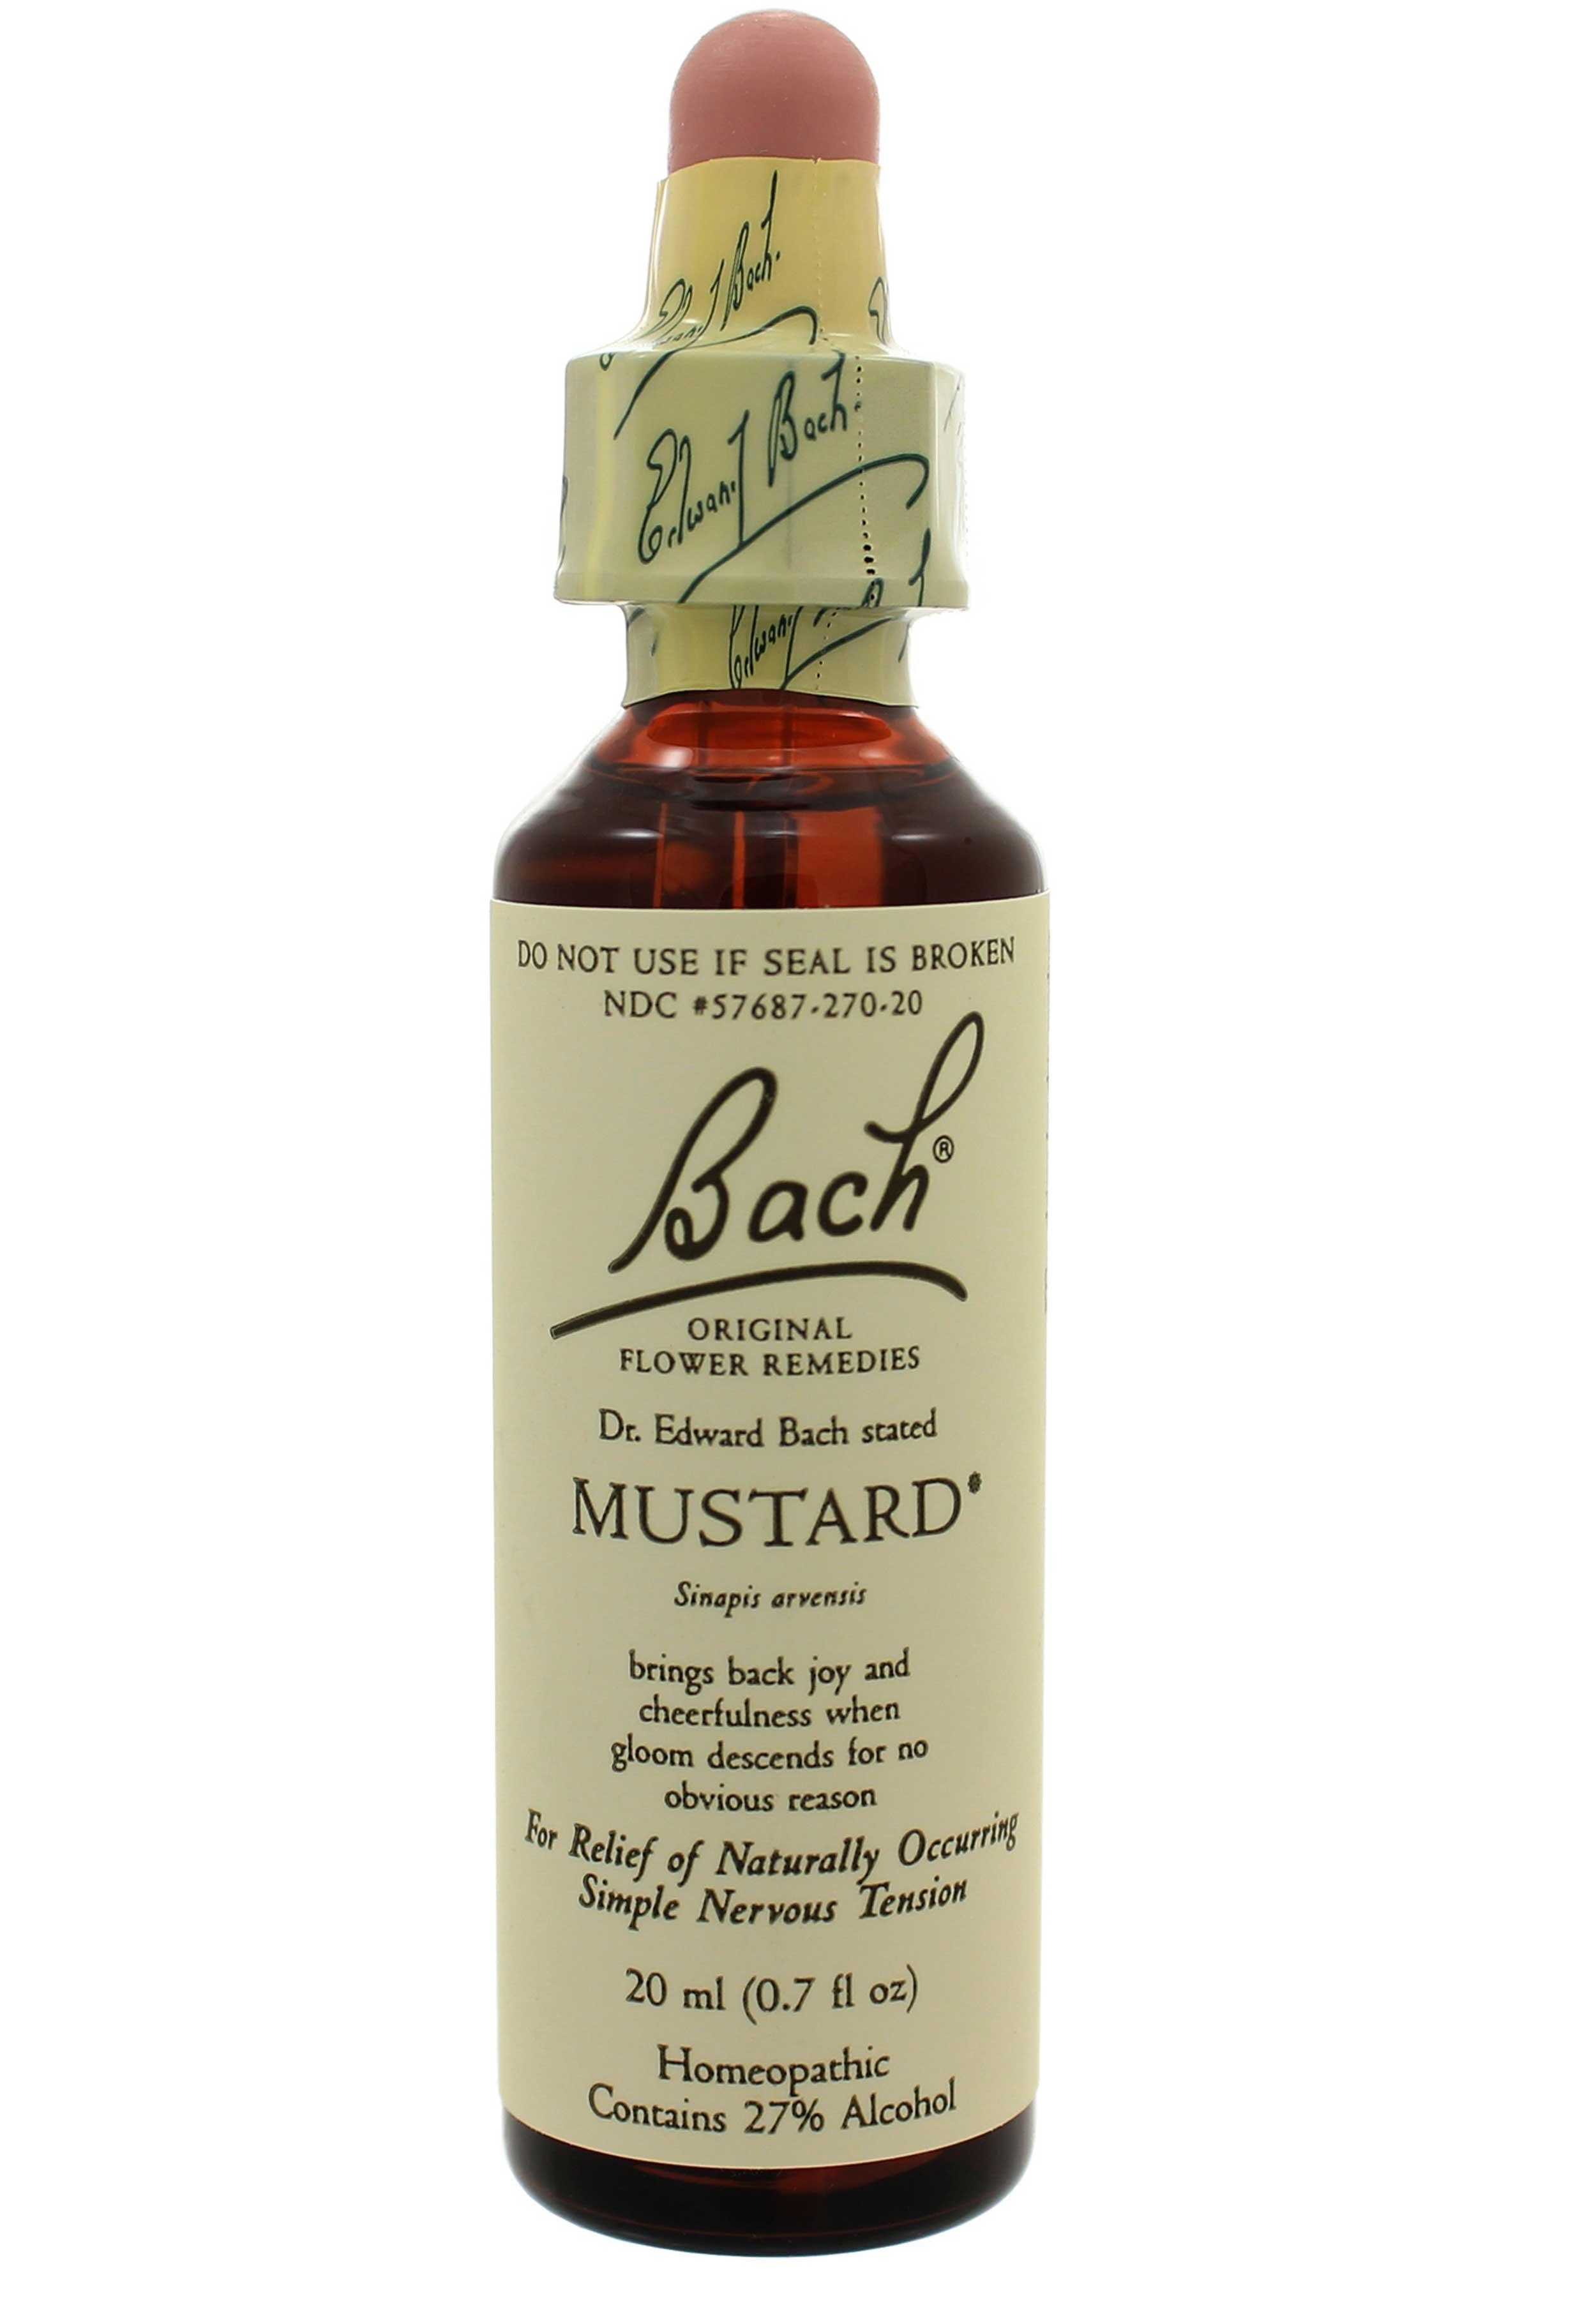 Bach Flower Remedies Mustard